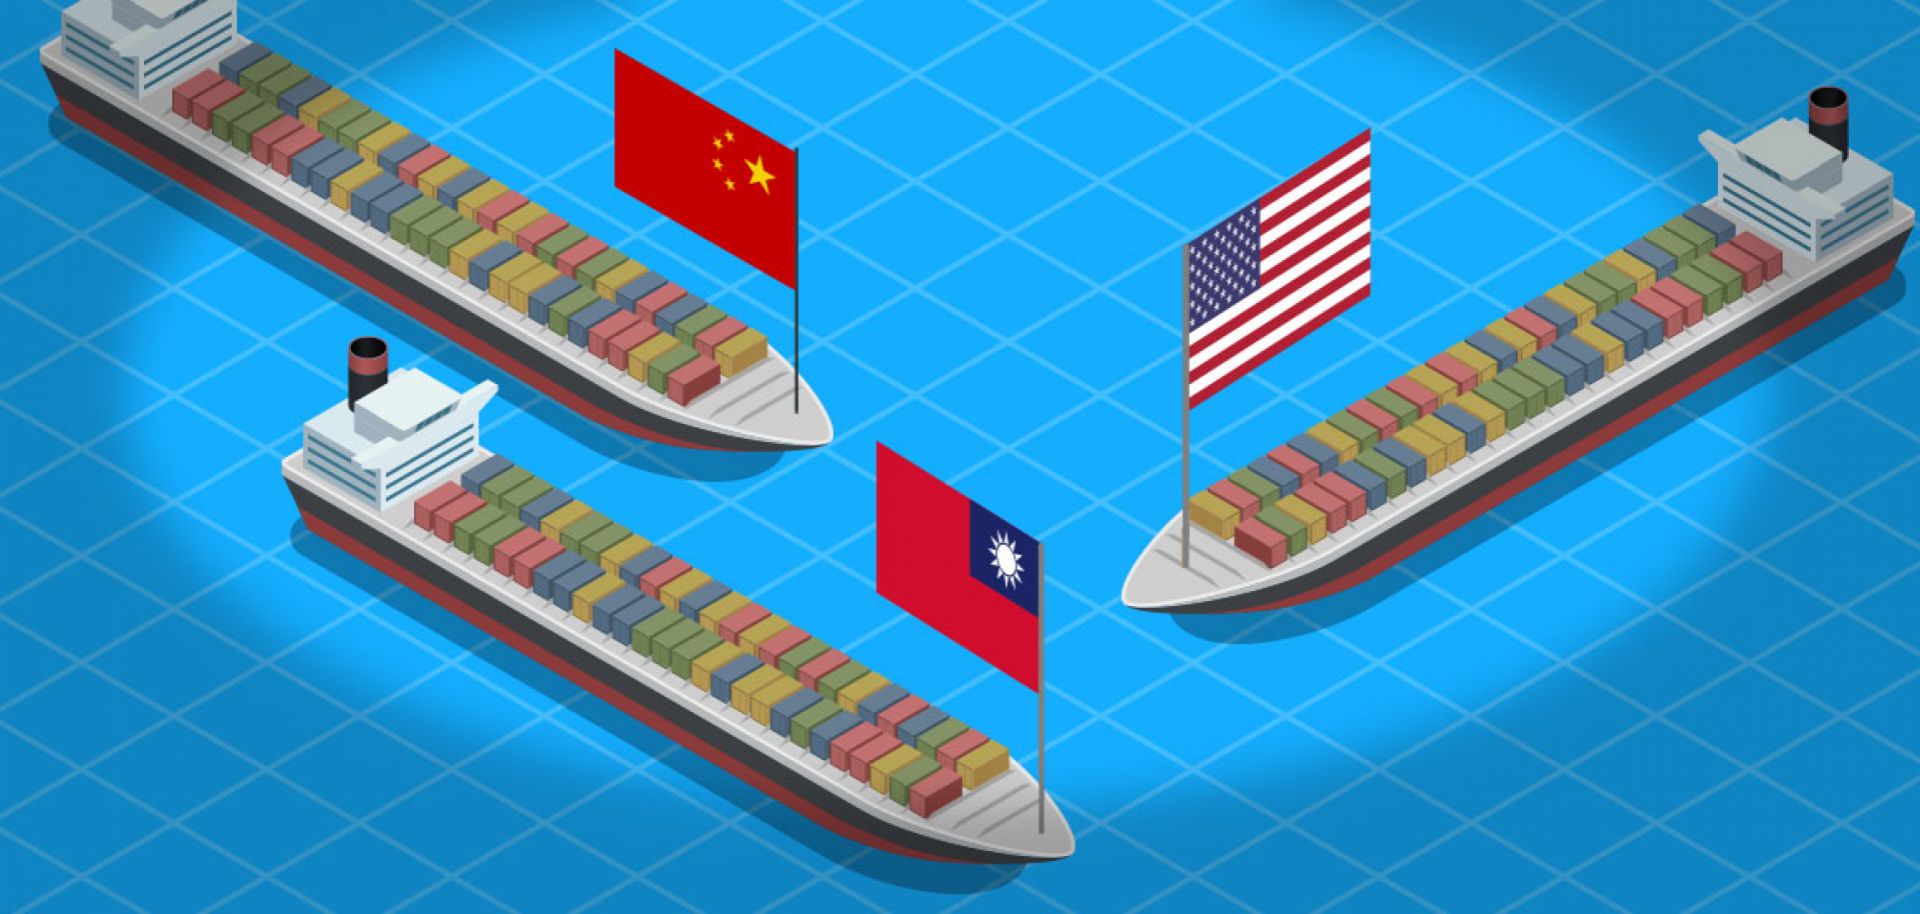 The tariffs could hurt strategic U.S. allies more.